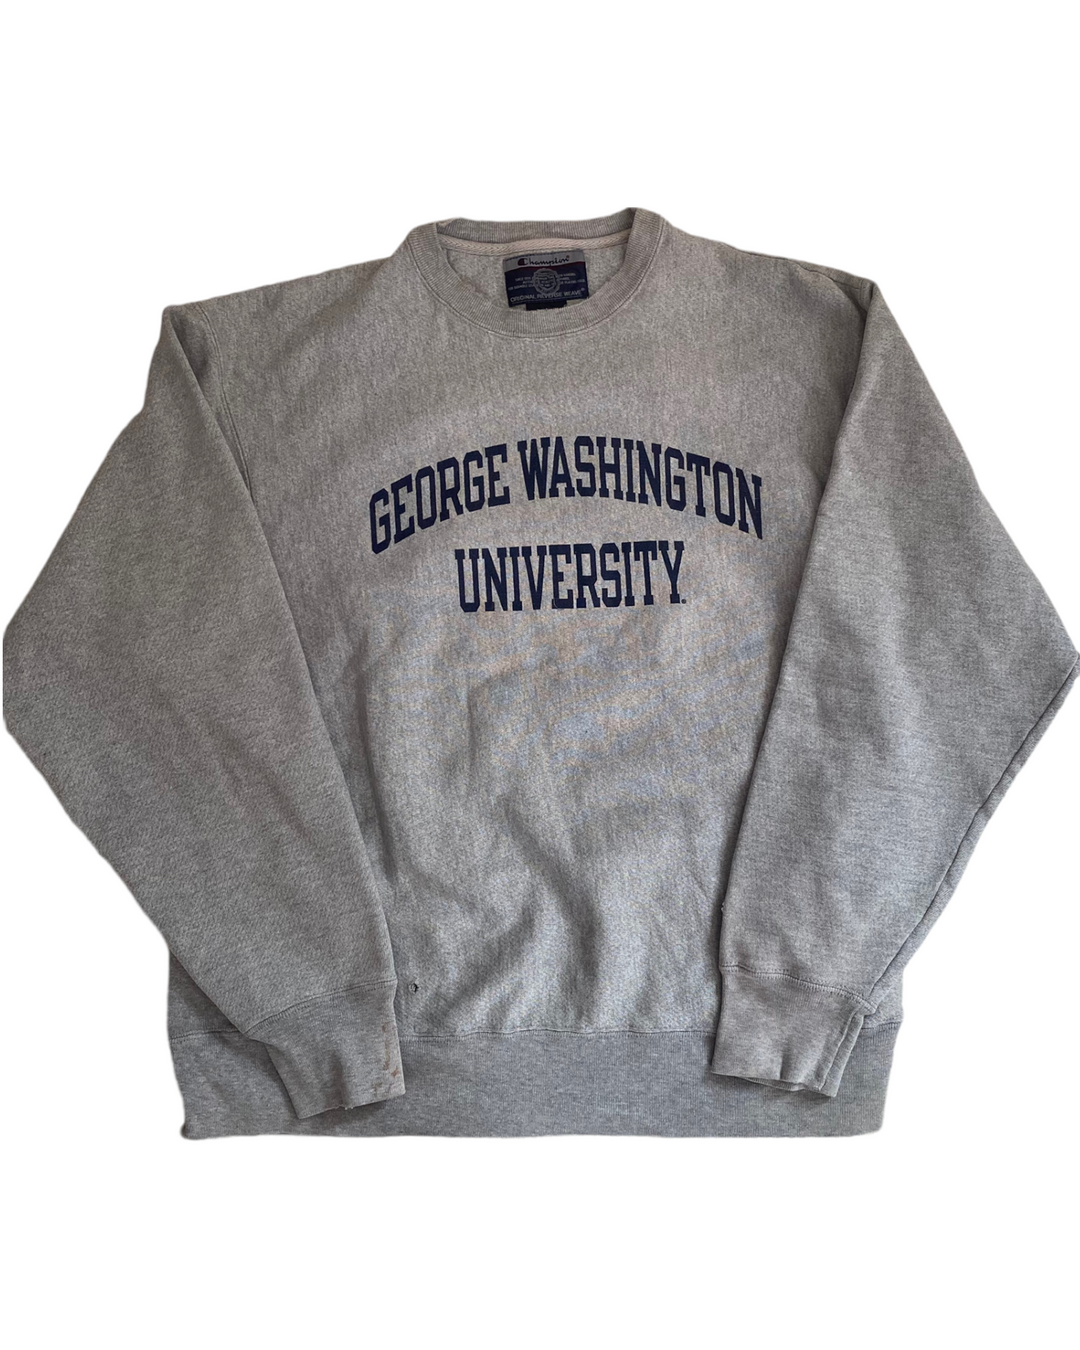 GW Vintage Sweatshirt